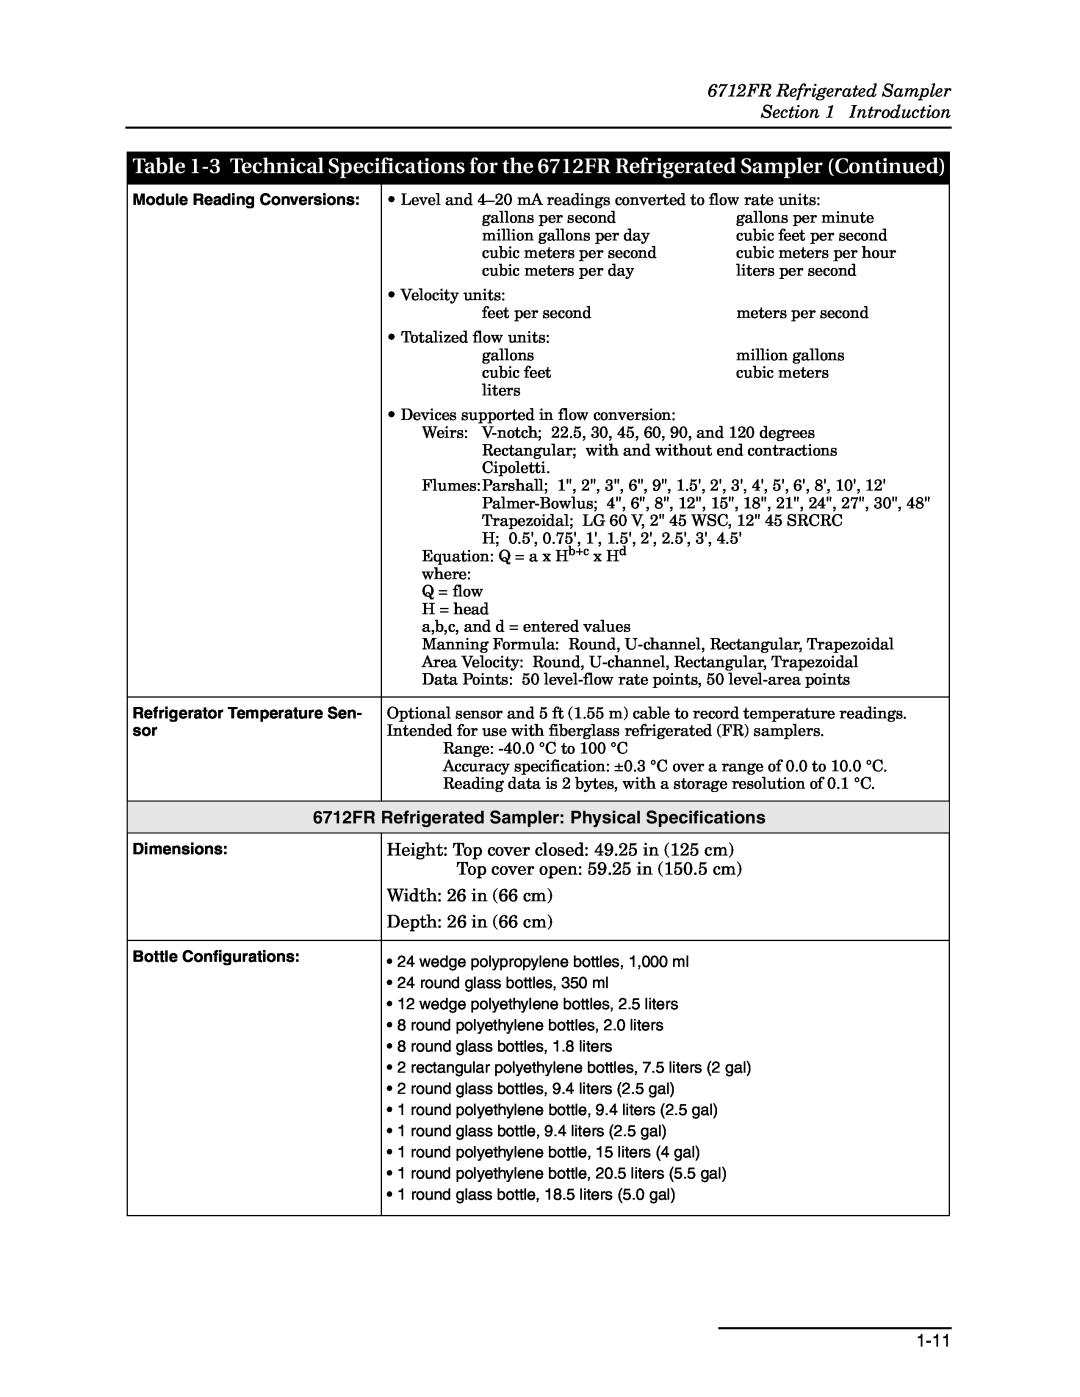 Teledyne manual 6712FR Refrigerated Sampler Introduction, 6712FR Refrigerated Sampler Physical Specifications, 1-11 